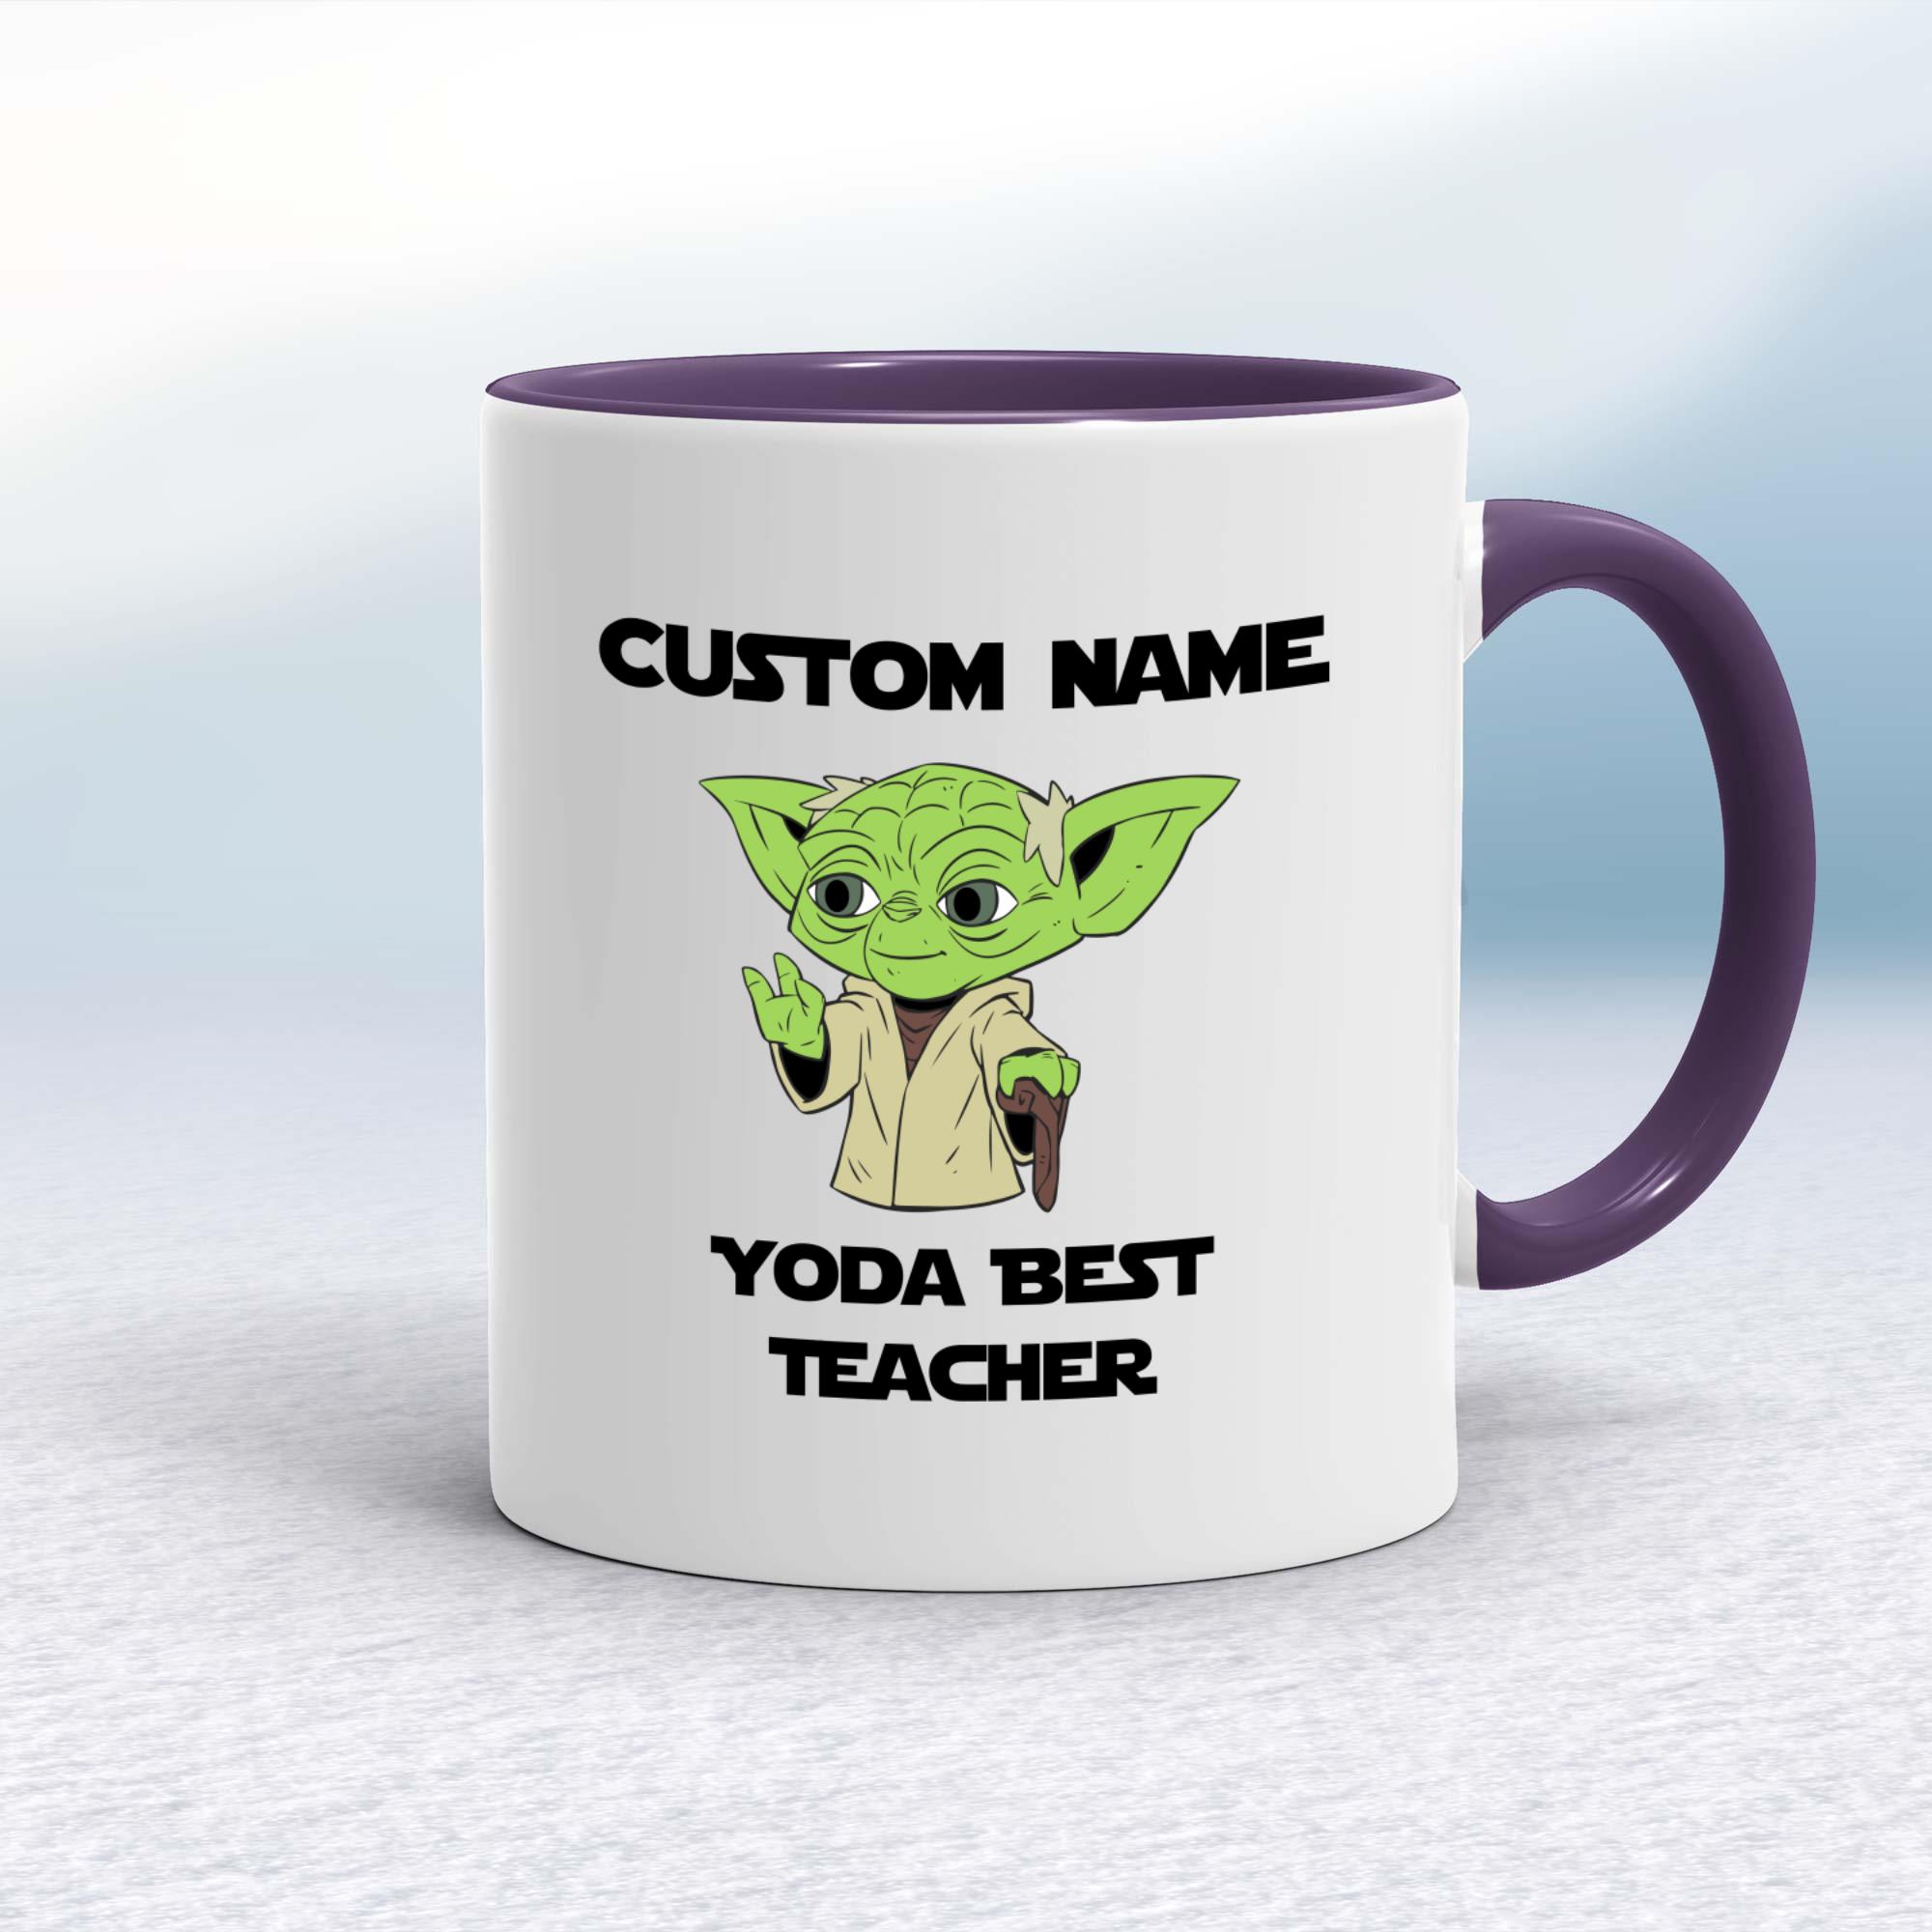 Yoda Best Yoga Teacher, Yoga Teacher Gift, Yoga Teacher Coffee Mug, Best Yoga  Teacher Mug, Gift Idea Yoga Teacher, Future Yoga Teacher -  Canada